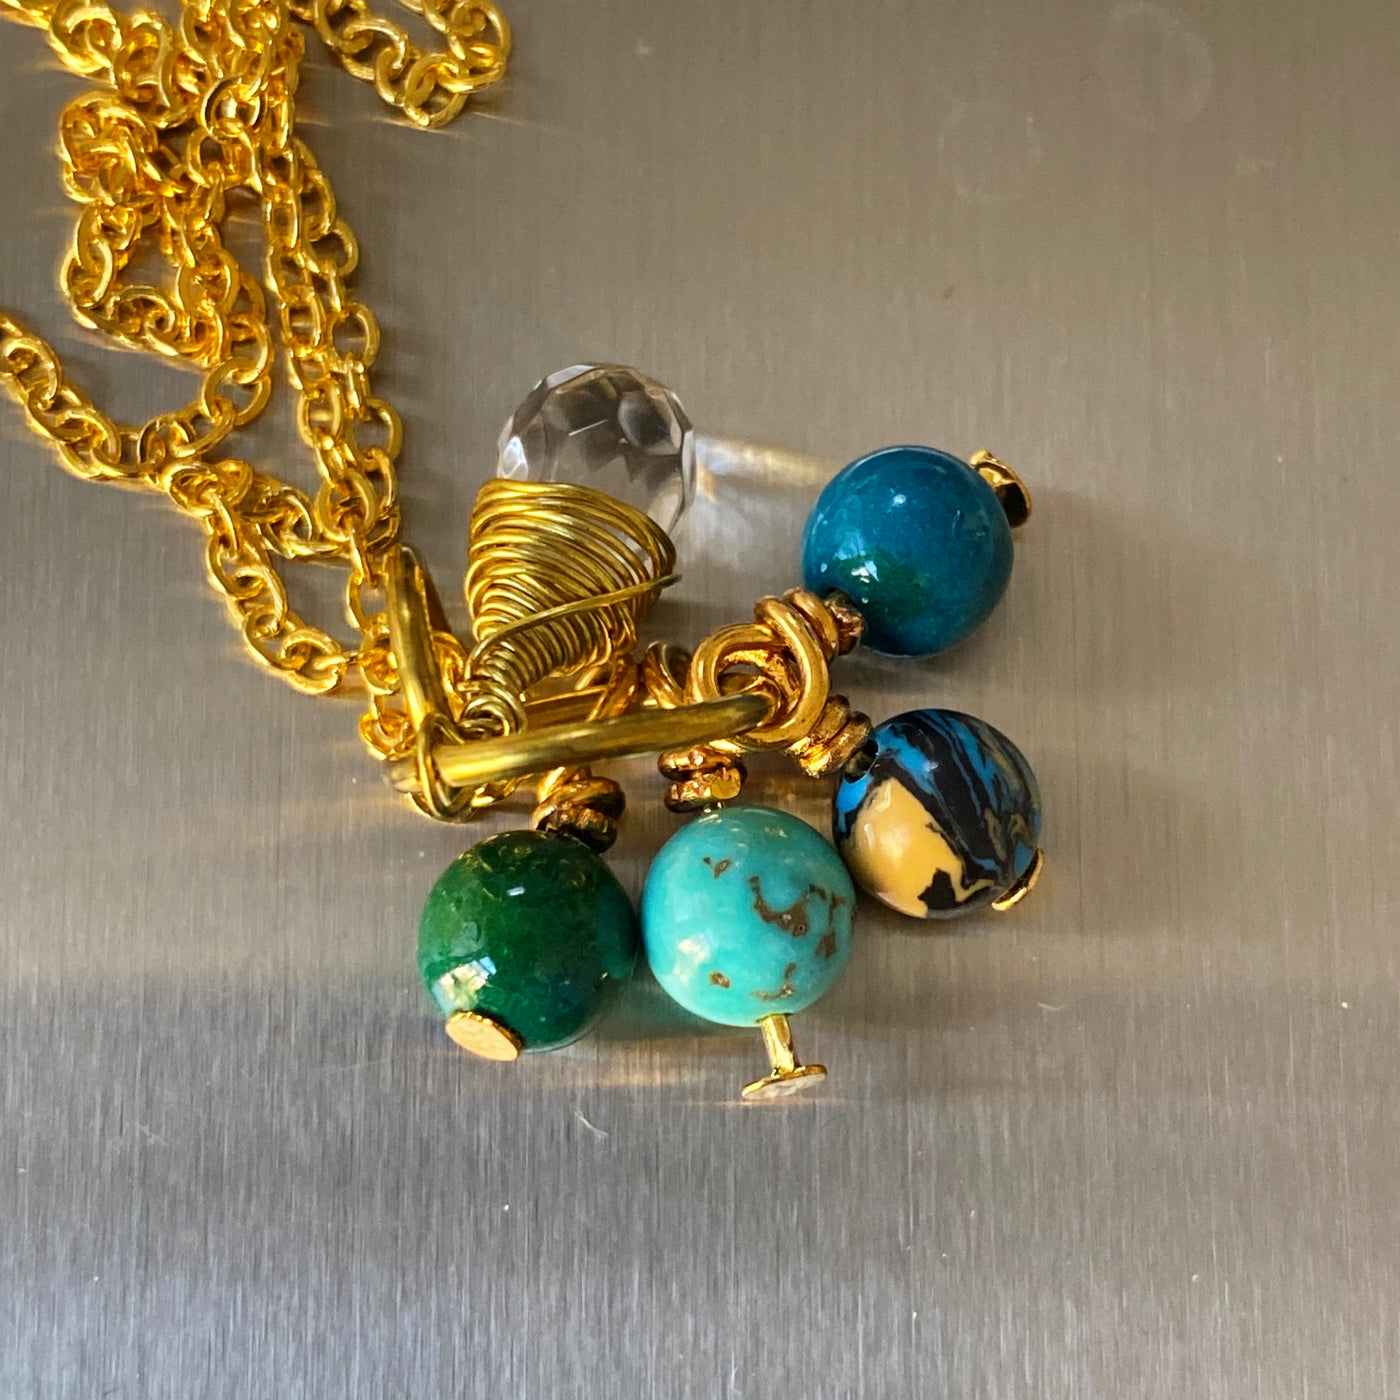 Chrystal briolette, crysocolla, turquoise, blue malachite small pendant.